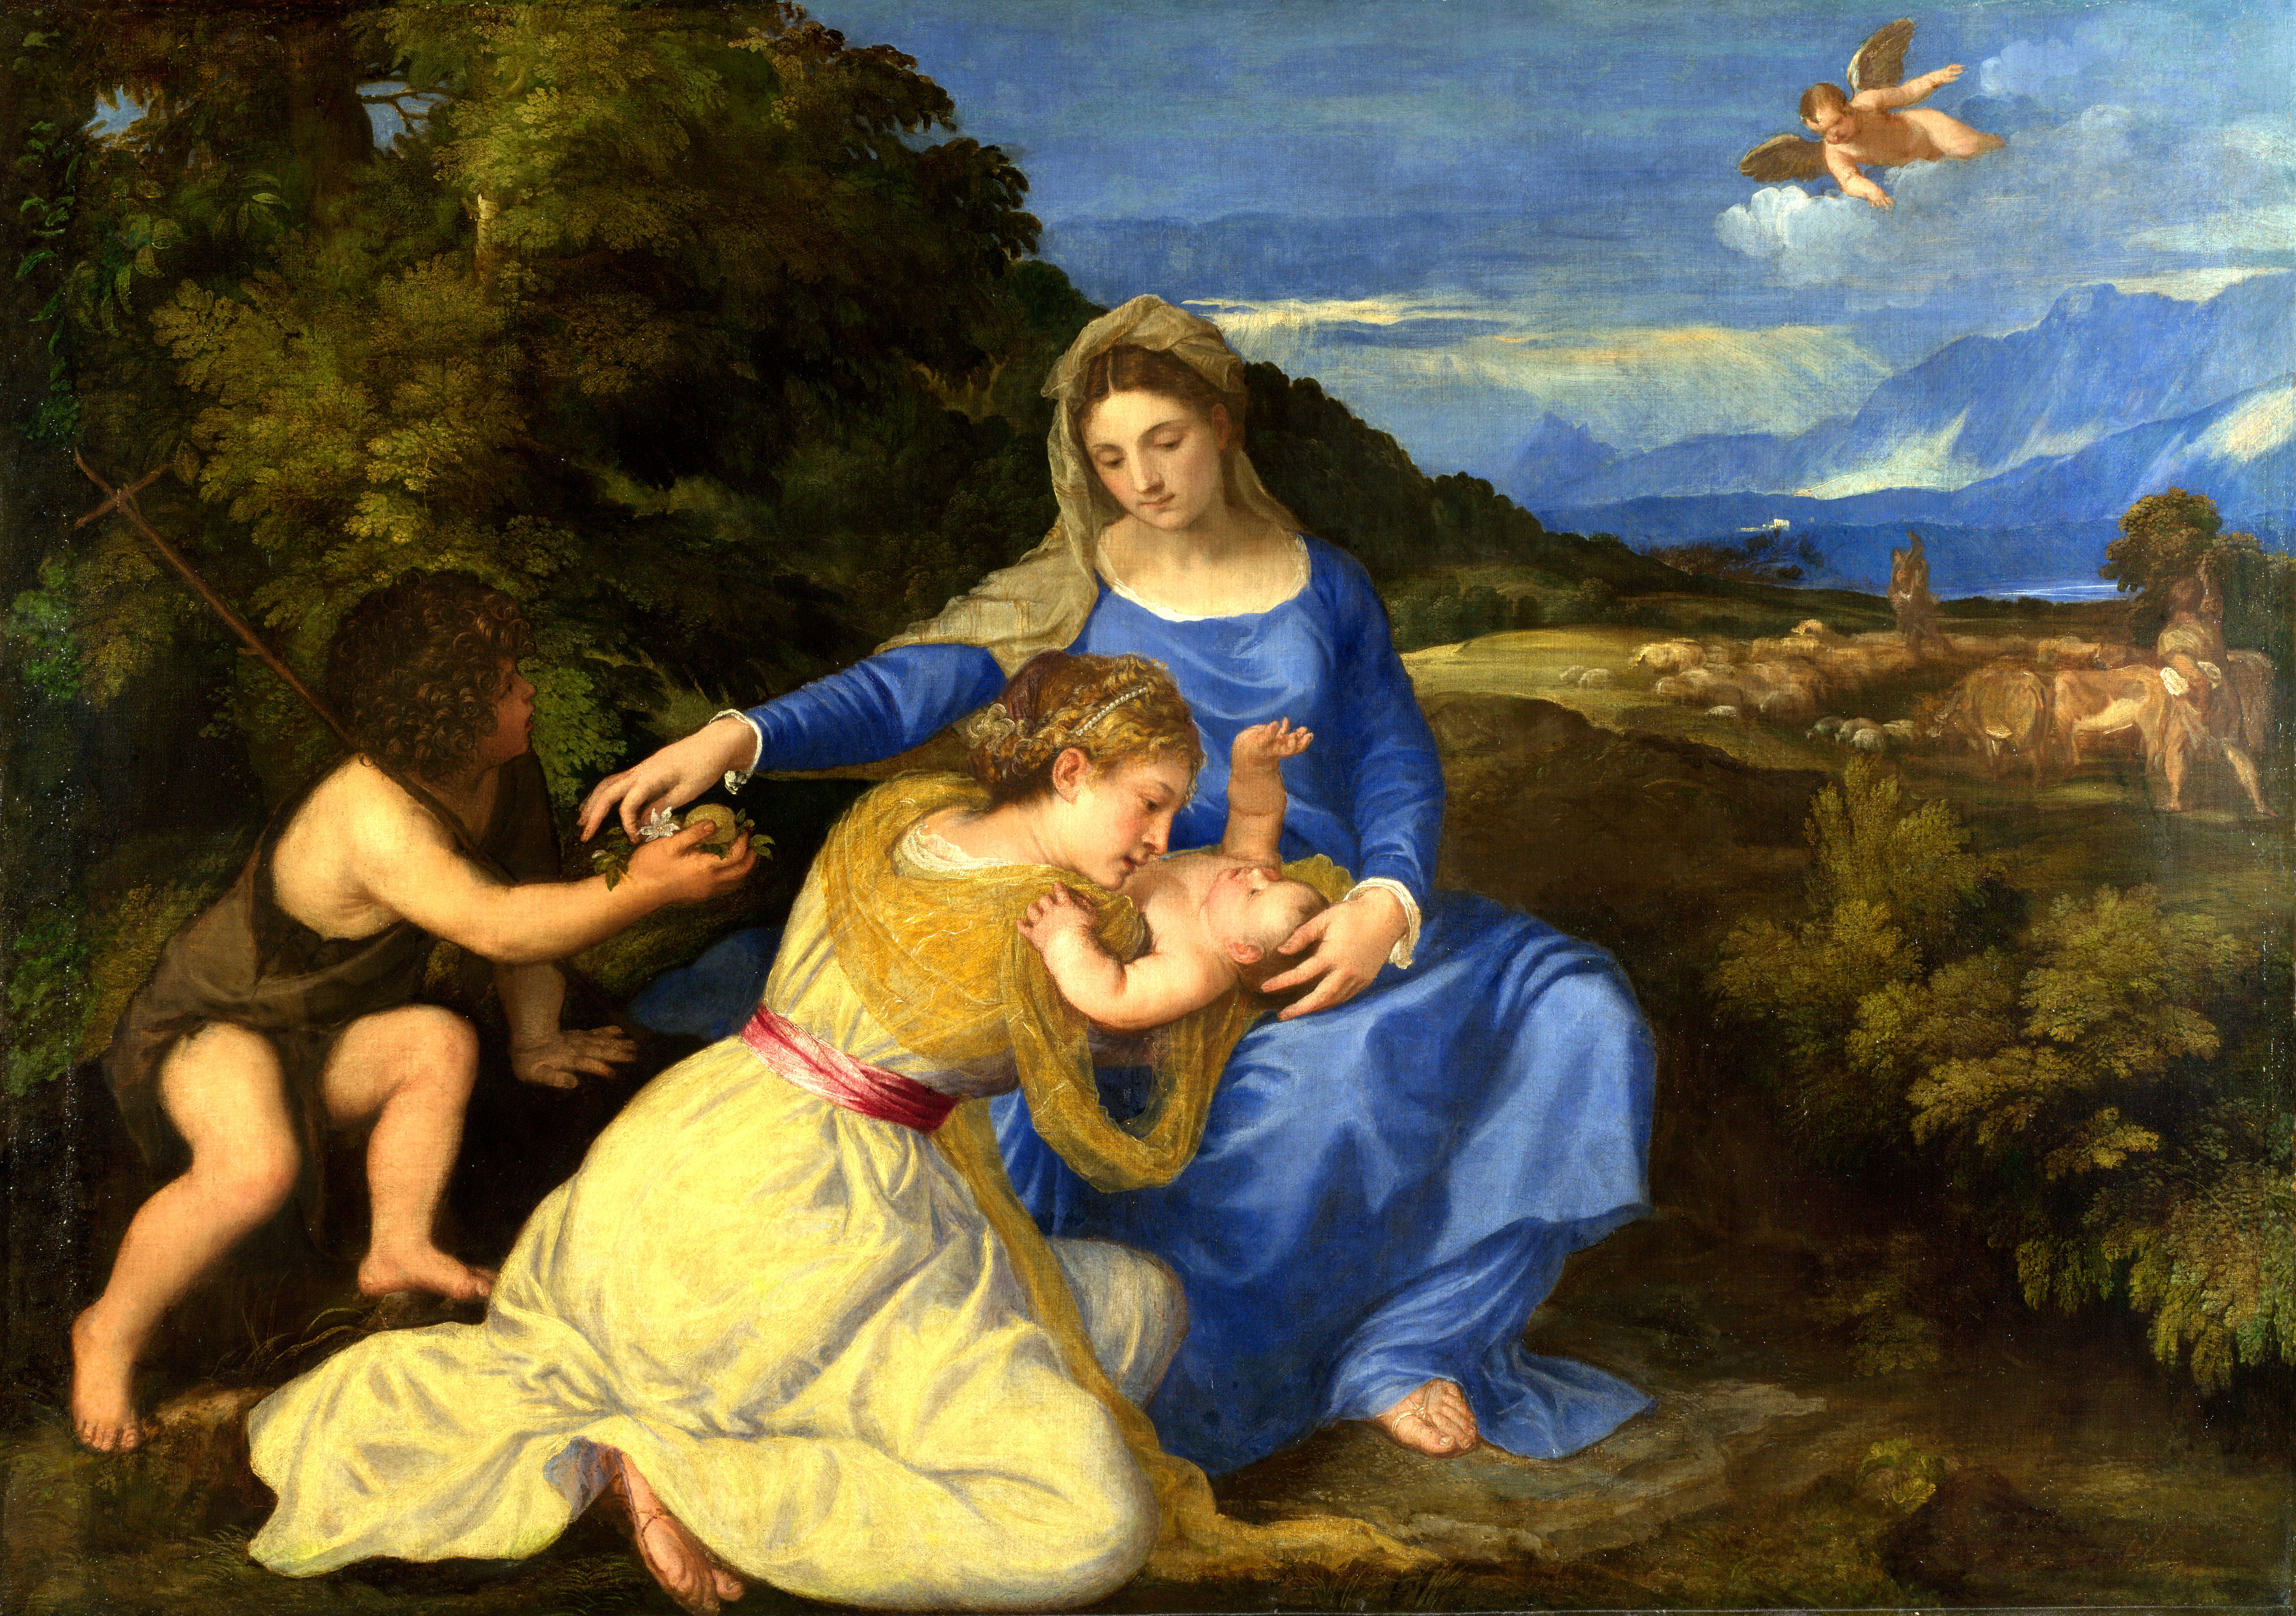 Название самых знаменитых картин. Тициан Мадонна с младенцем. Тициан Вечеллио Мадонна. ,Вечеллио Тициан , «Мадонна семьи Куччина»,. Тициан Мадонна с младенцем, святыми и святым Иоанном (1530).